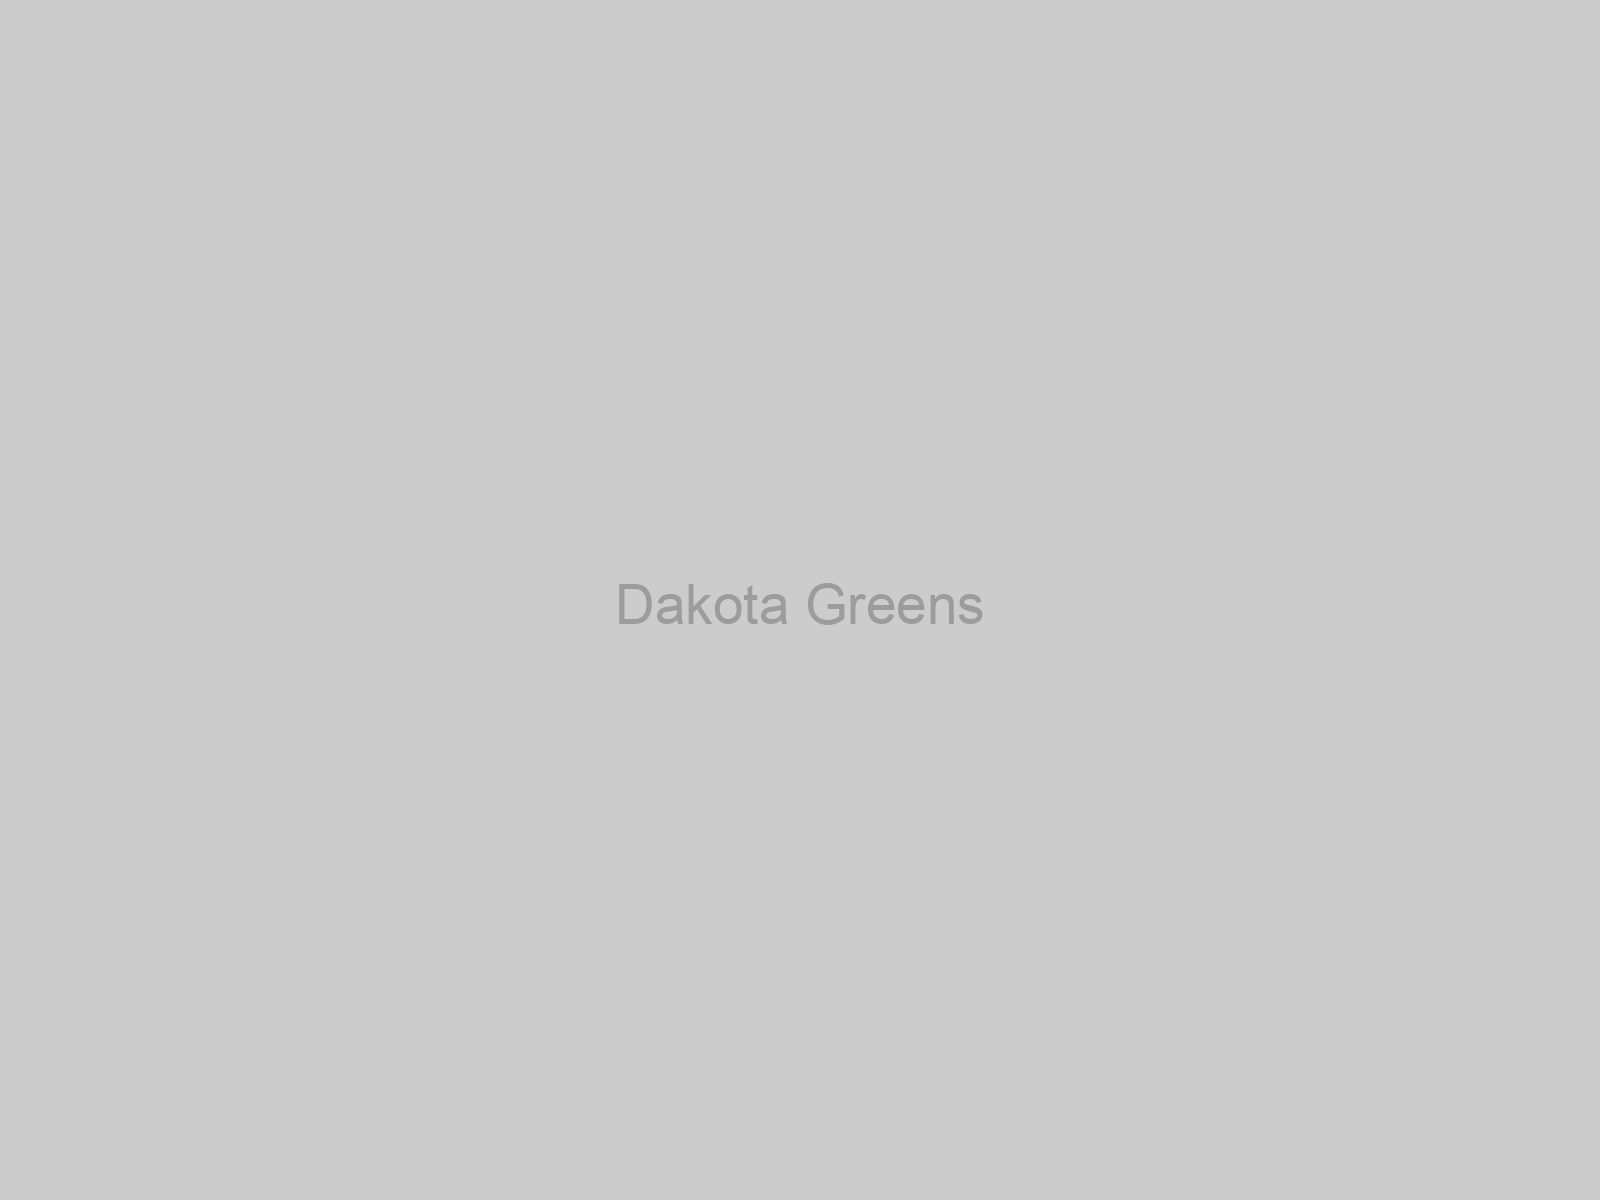 Dakota Greens